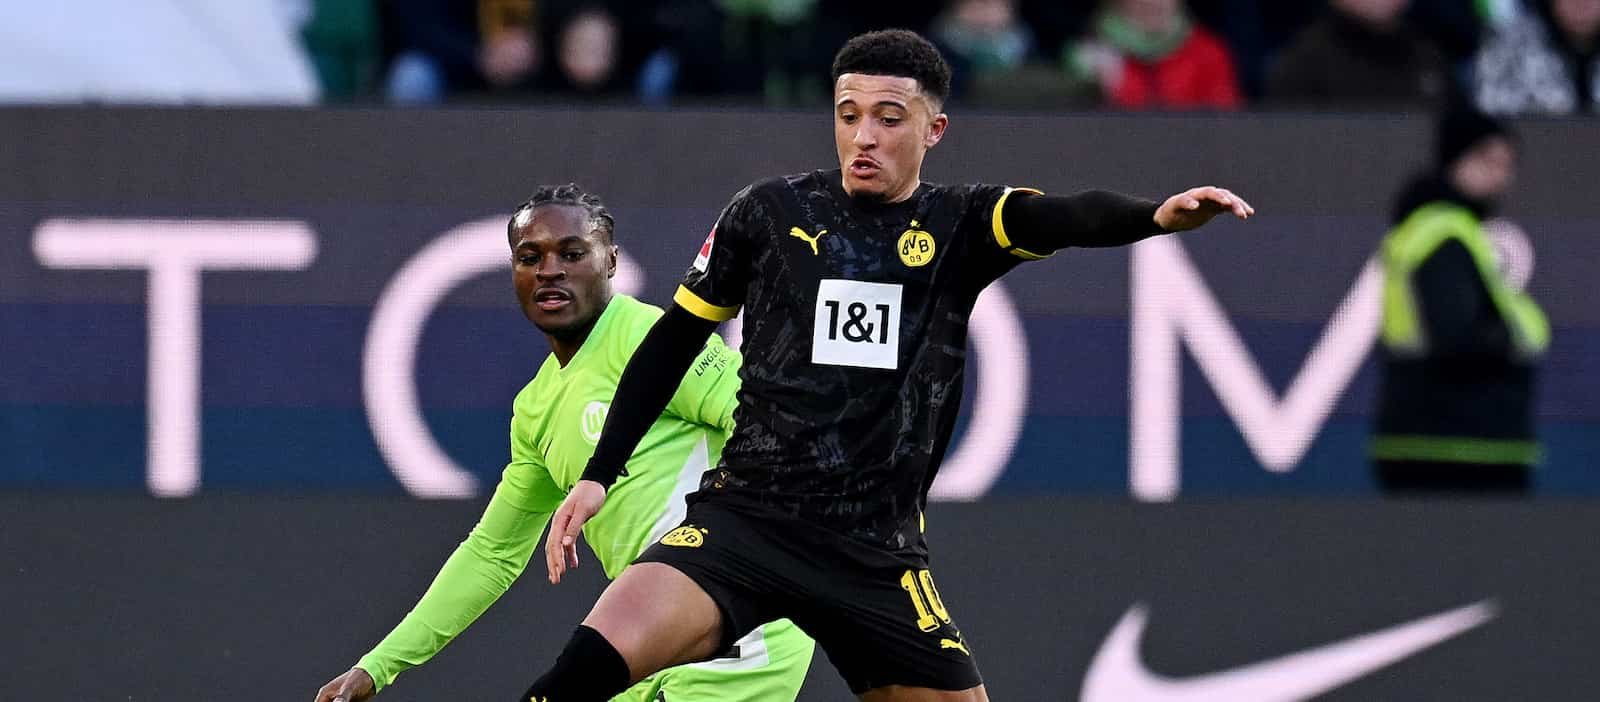 Lothar Matthäus blames Jadon Sancho for Borussia Dortmund’s woes, says he “can’t be the saviour” – Man United News And Transfer News